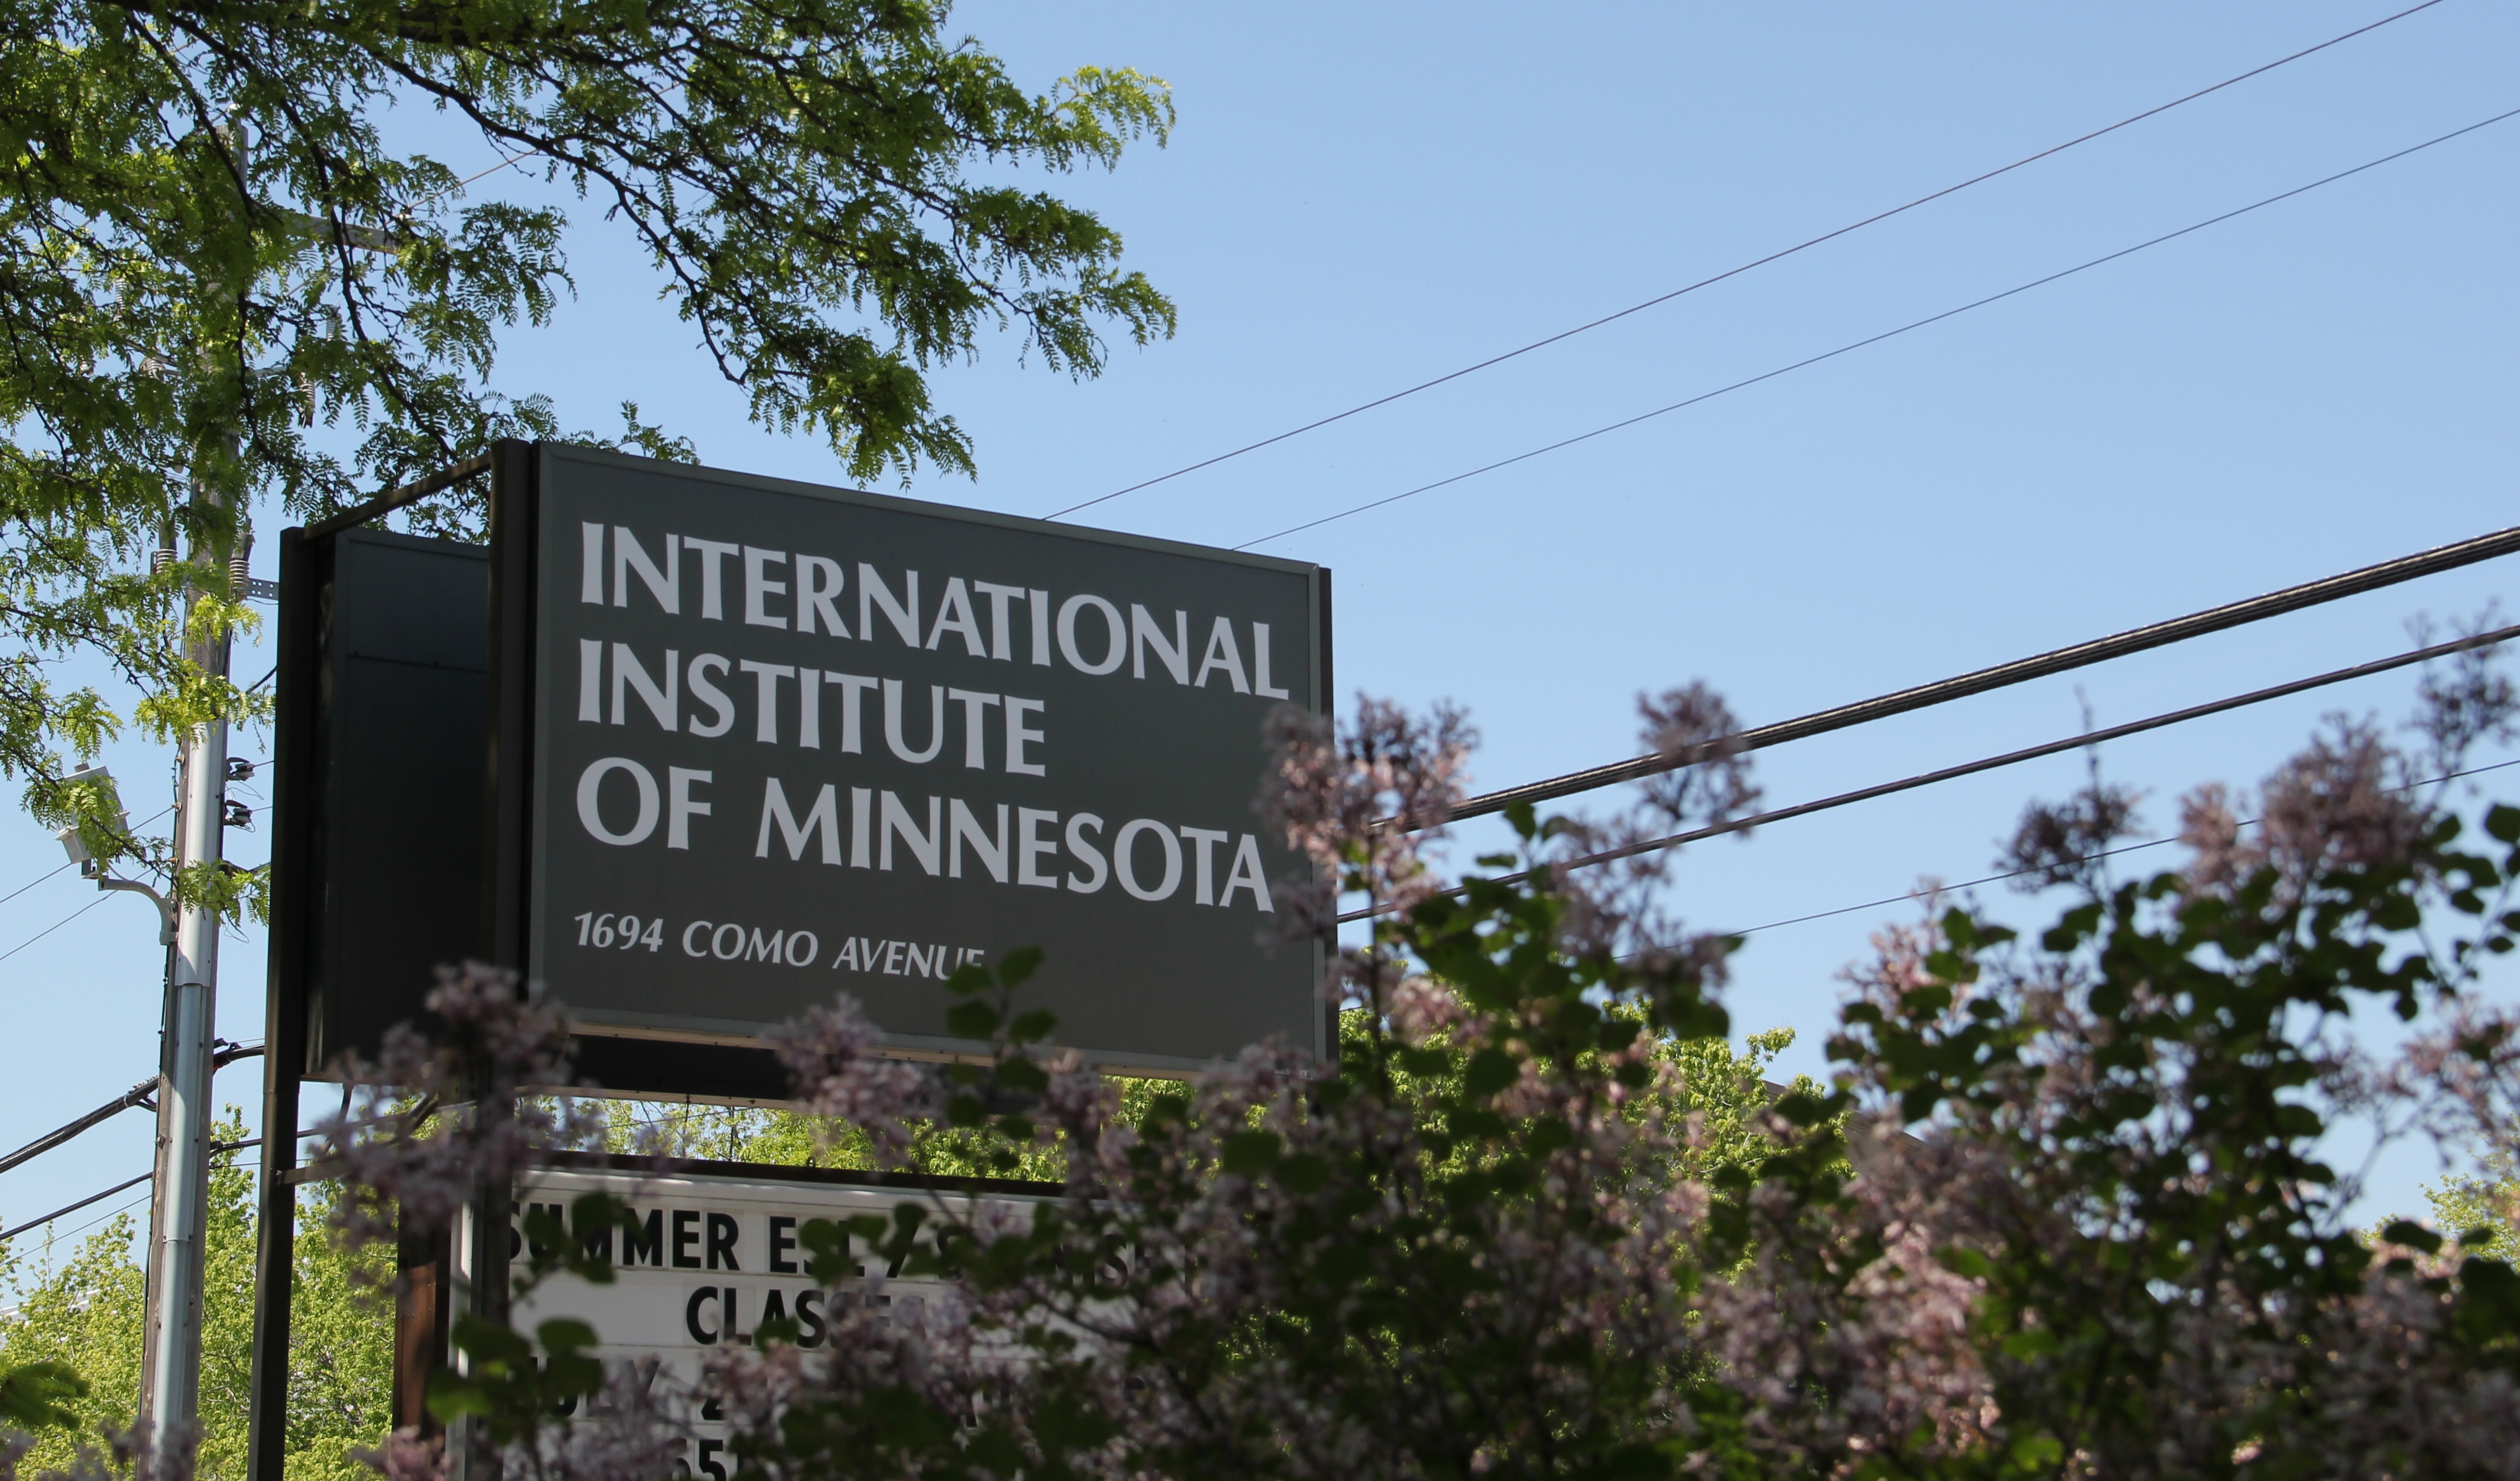 The International Institute of Minnesota.